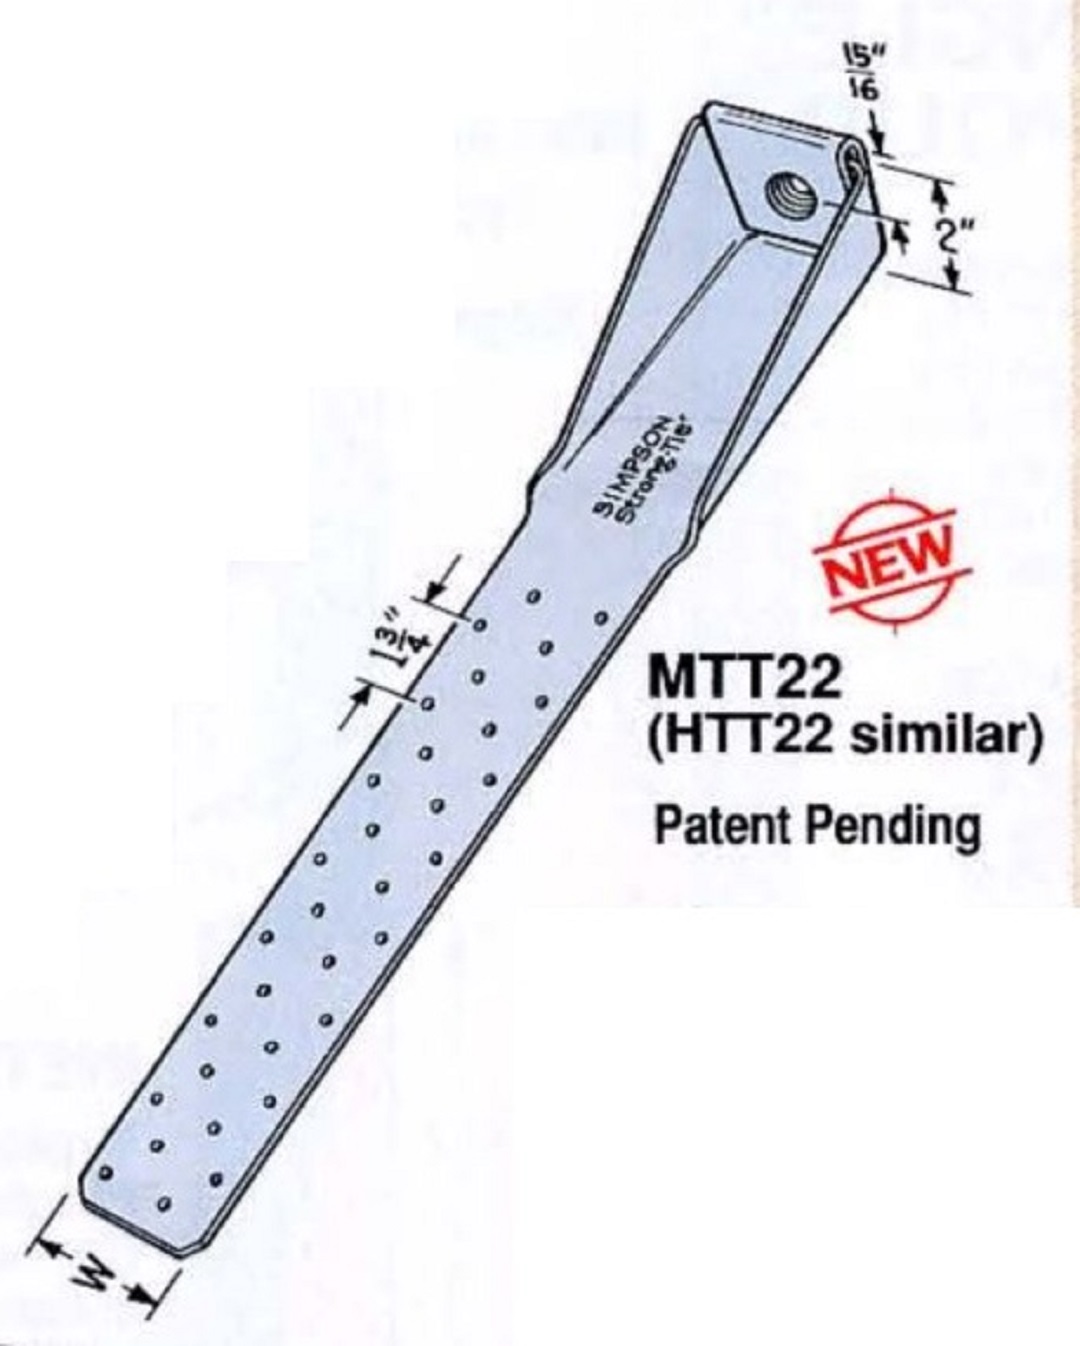 HTT22 and MTT22 (1994)